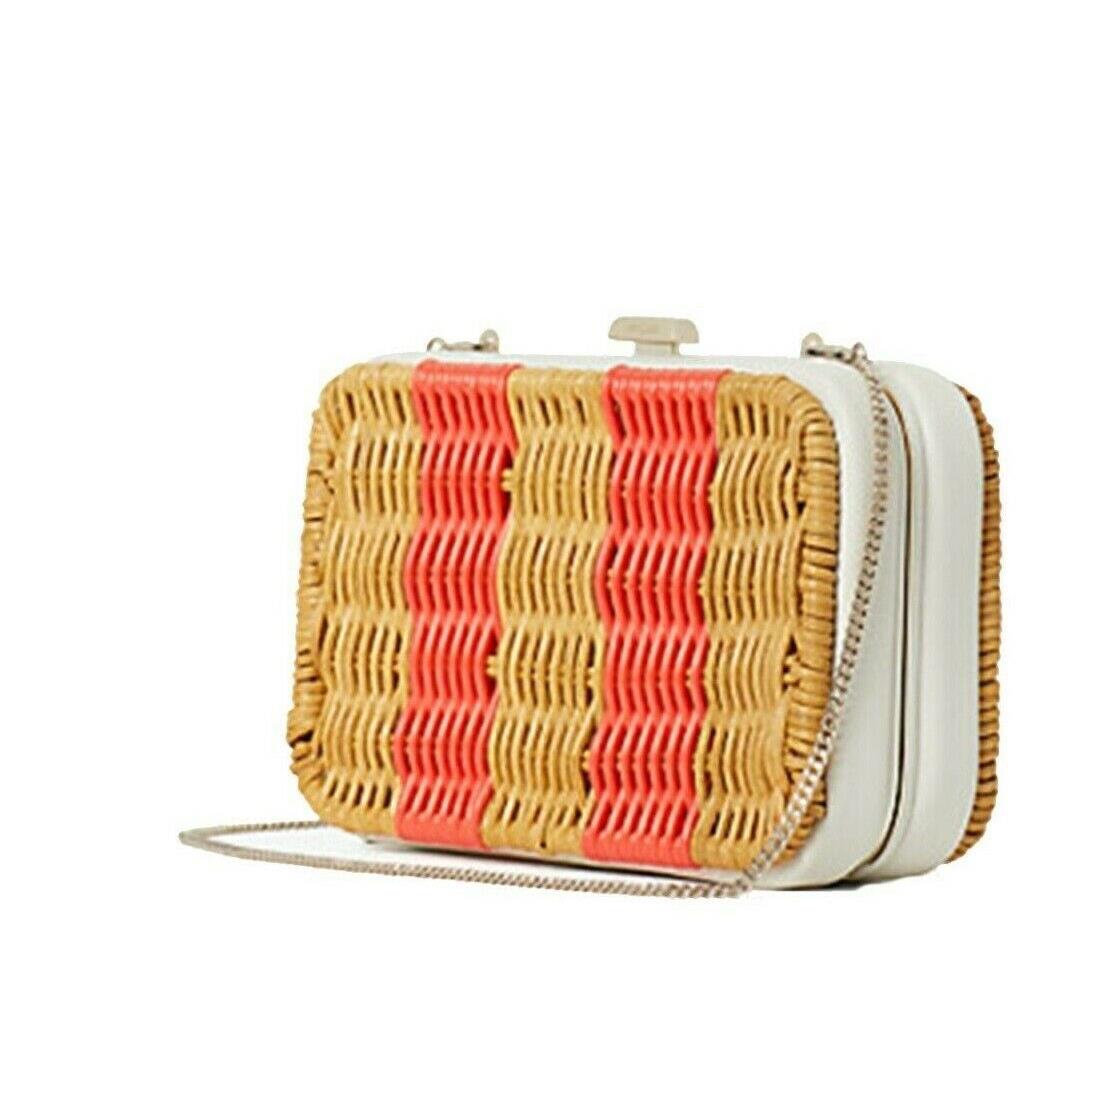 Fashion that Makes Us Sad: Kate Spade's $328 Armadillo Basket